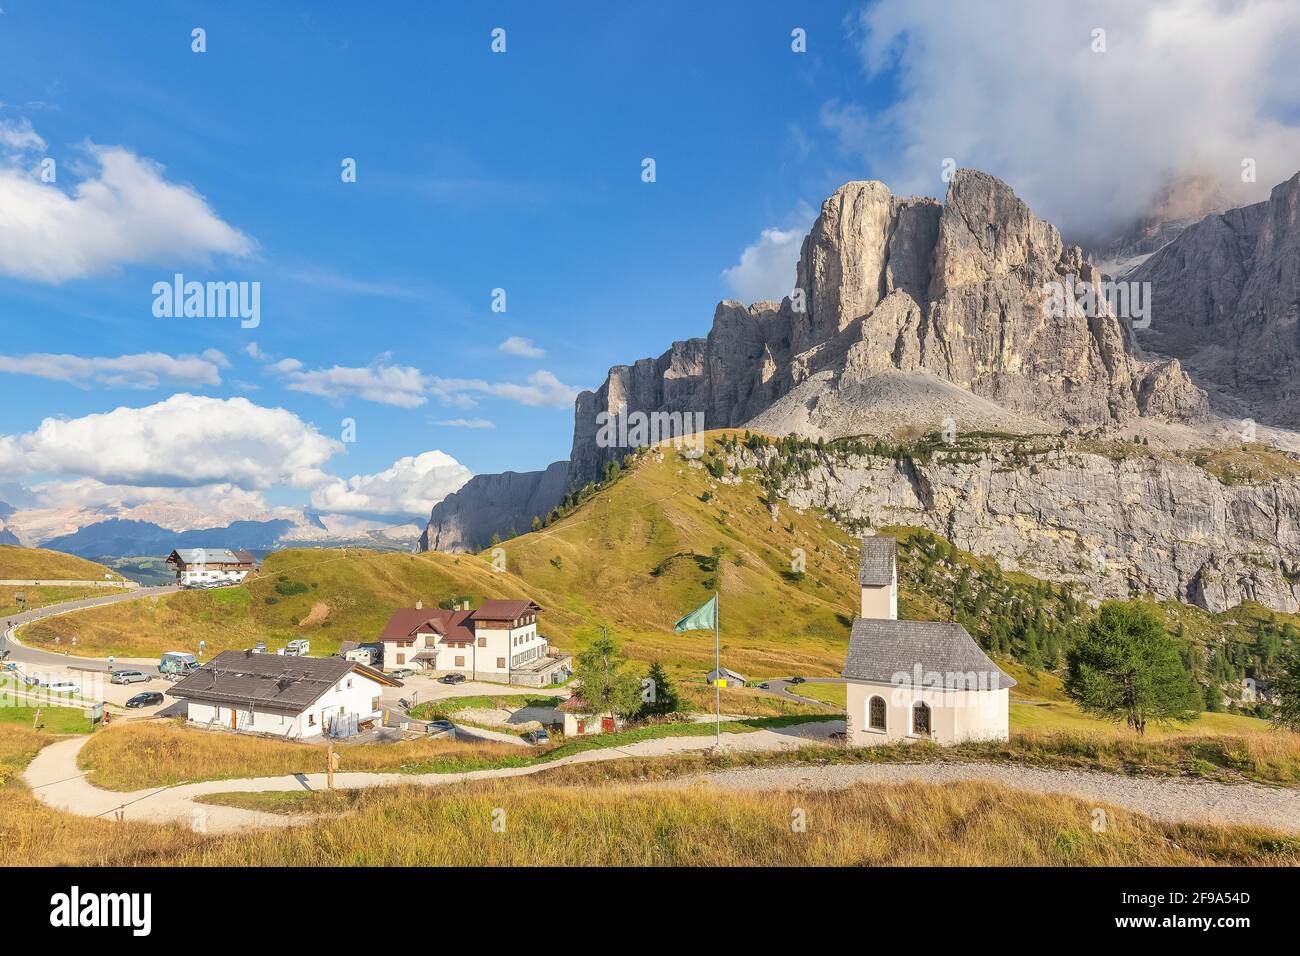 Europe, Italy, South Tyrol, Bolzano. Alpine church in the Gardena pass, South Tyrol, Dolomites Stock Photo